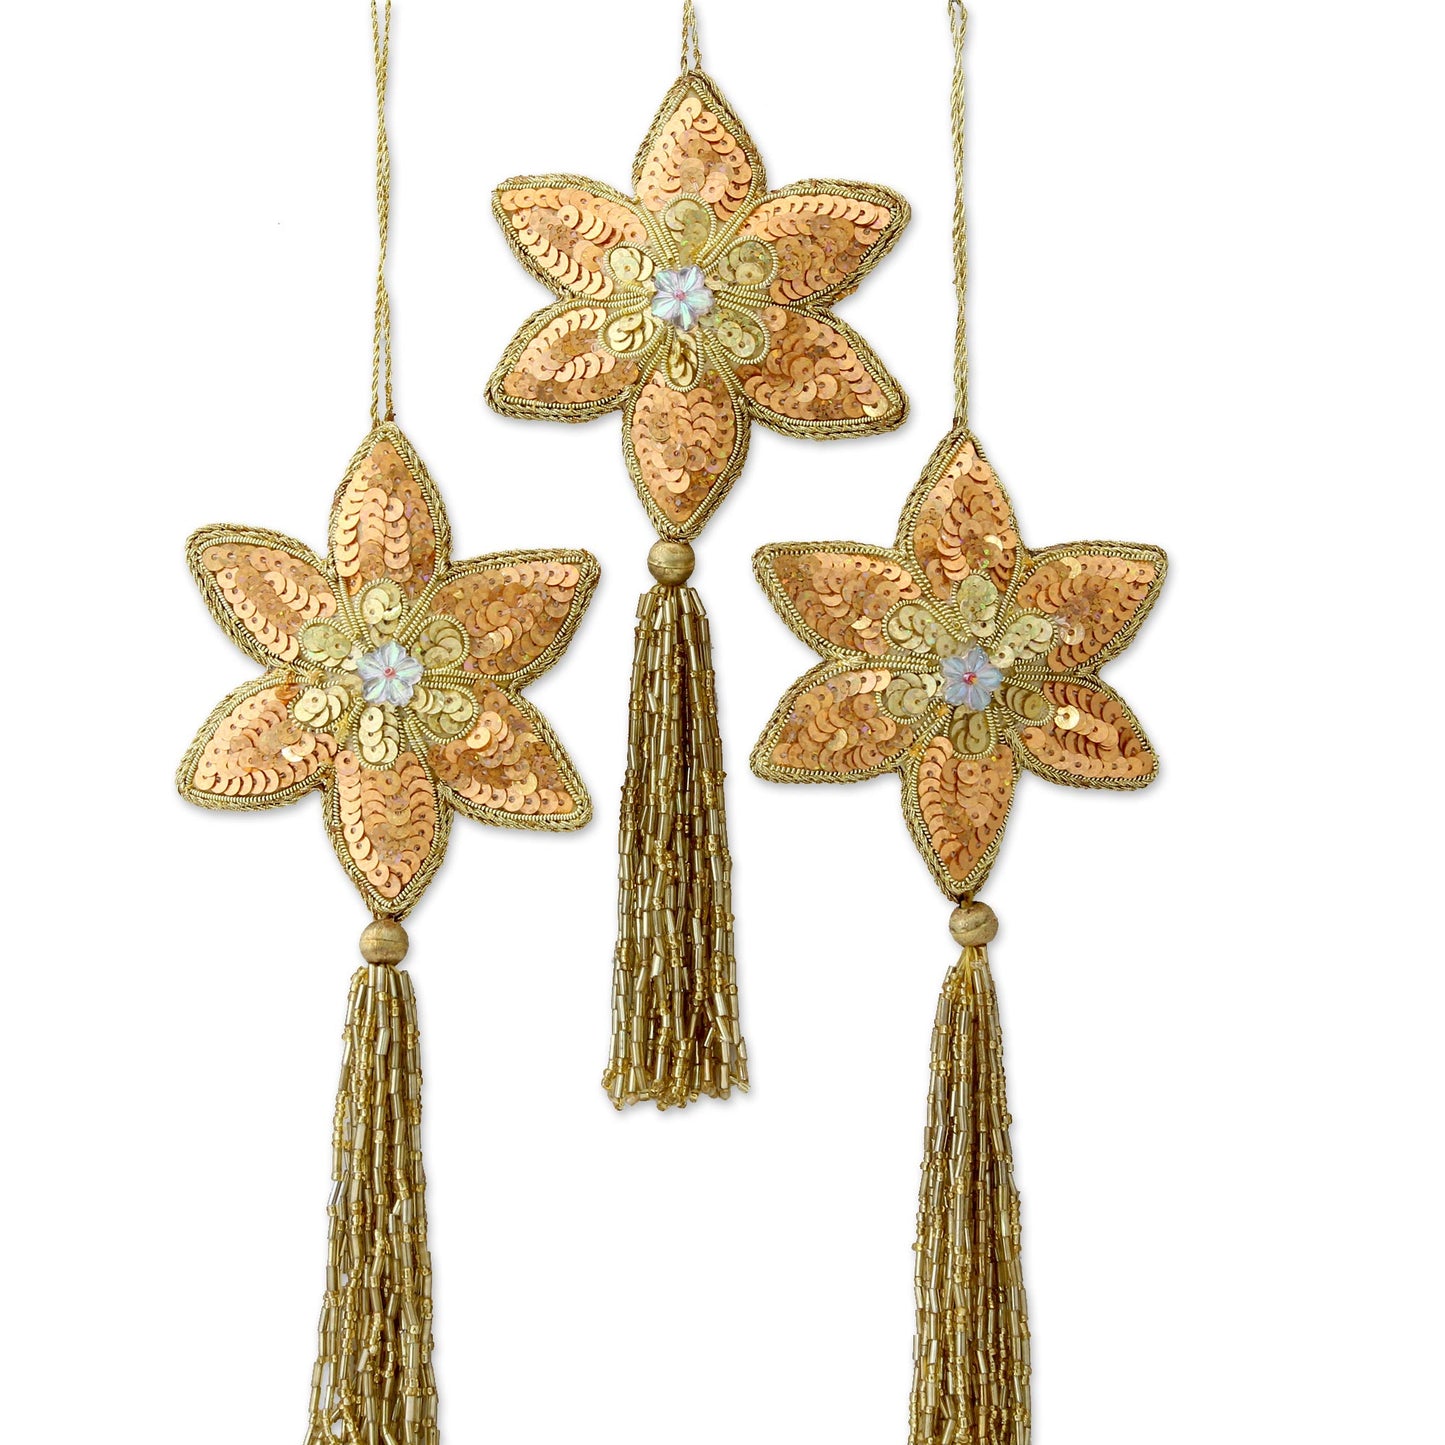 Golden Poinsettia Beaded Ornaments